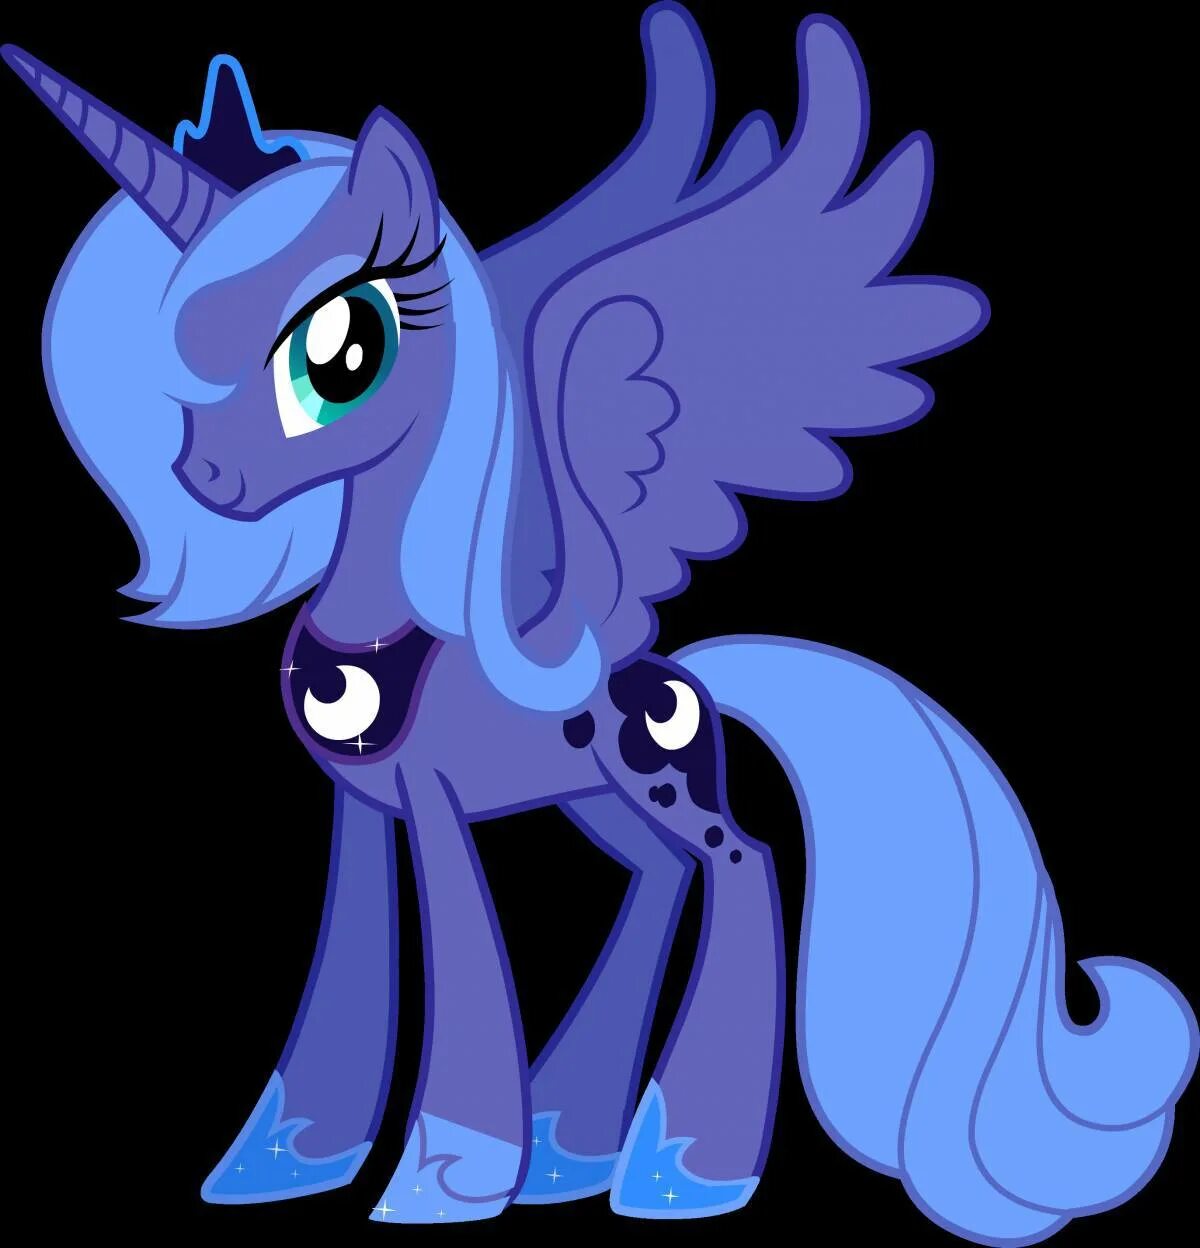 My little pony принцесса луна. Аликорн принцесса Луна. Пони Аликорн принцесса Луна. My little Pony аликорны принцесса Луна. МЛП Луна маленькая.